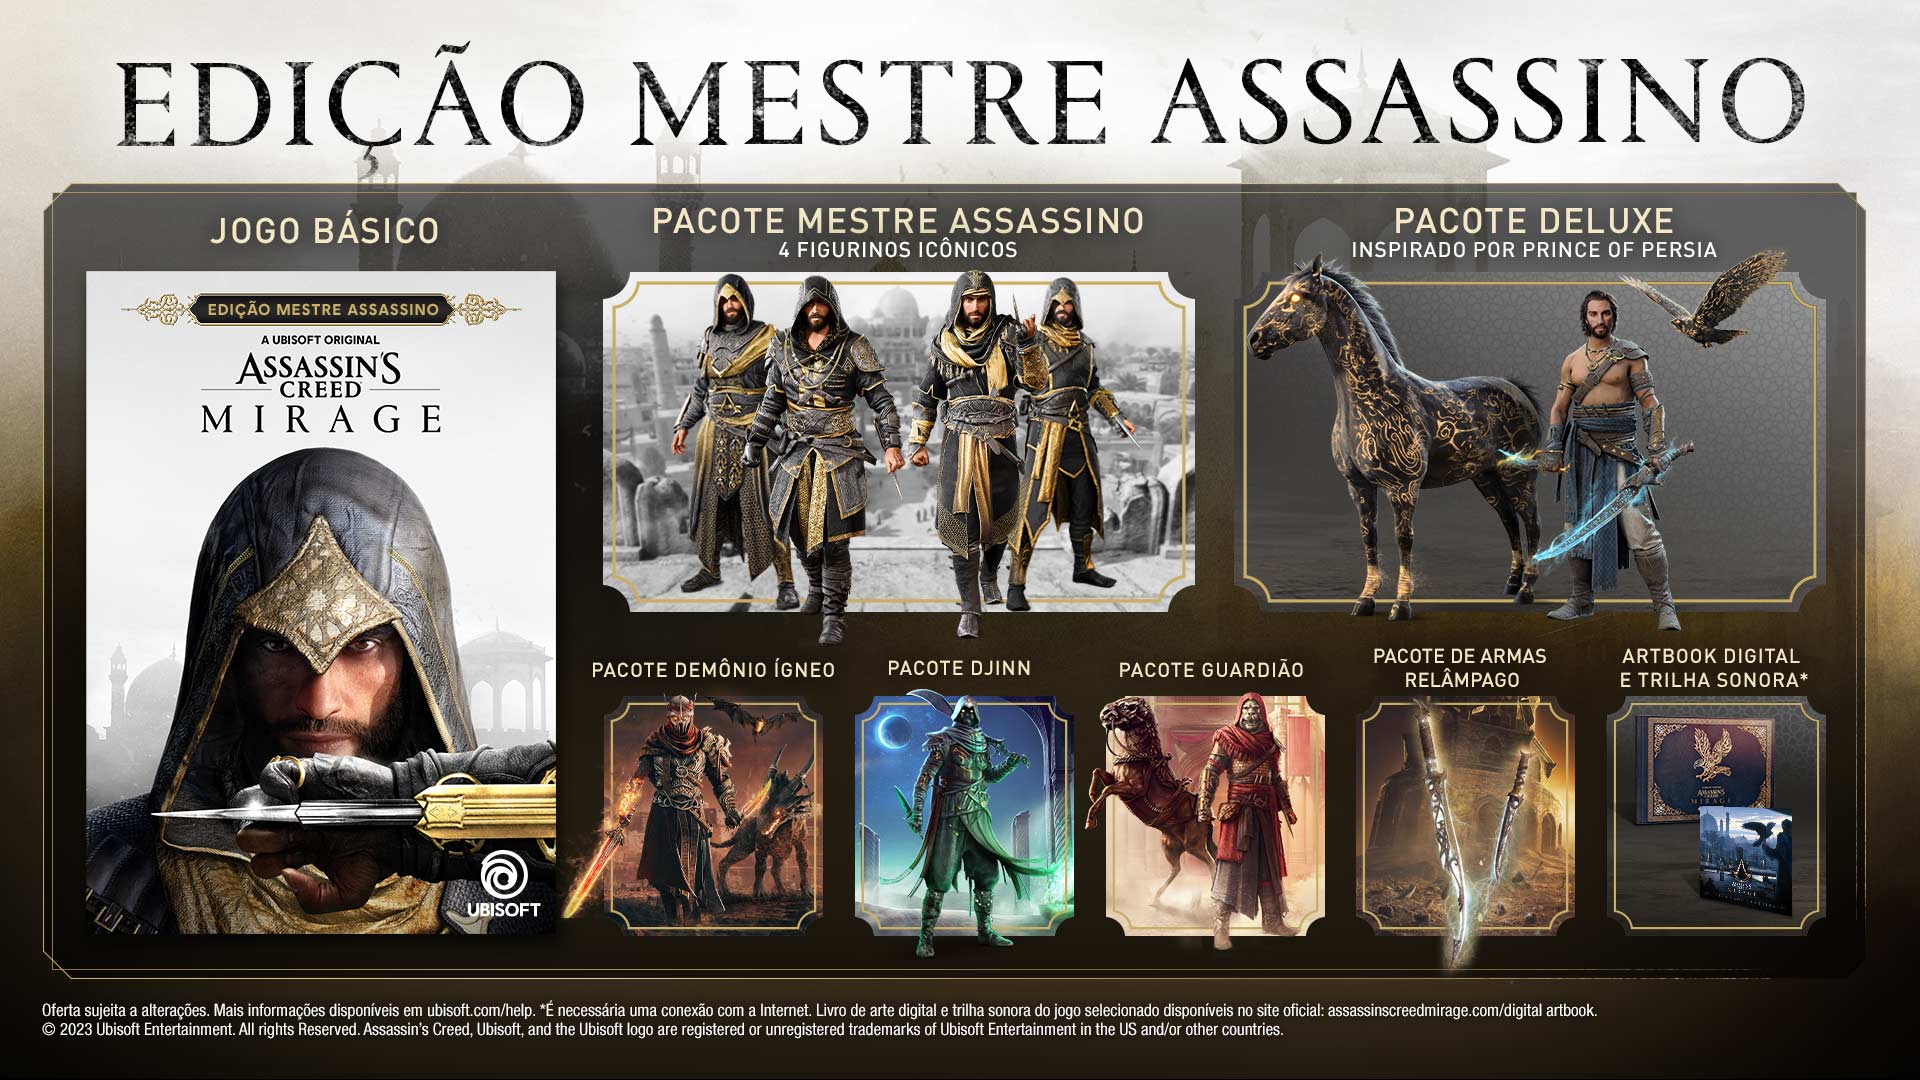 Assassin's Creed Mirage: veja os Requisitos Mínimos de PC